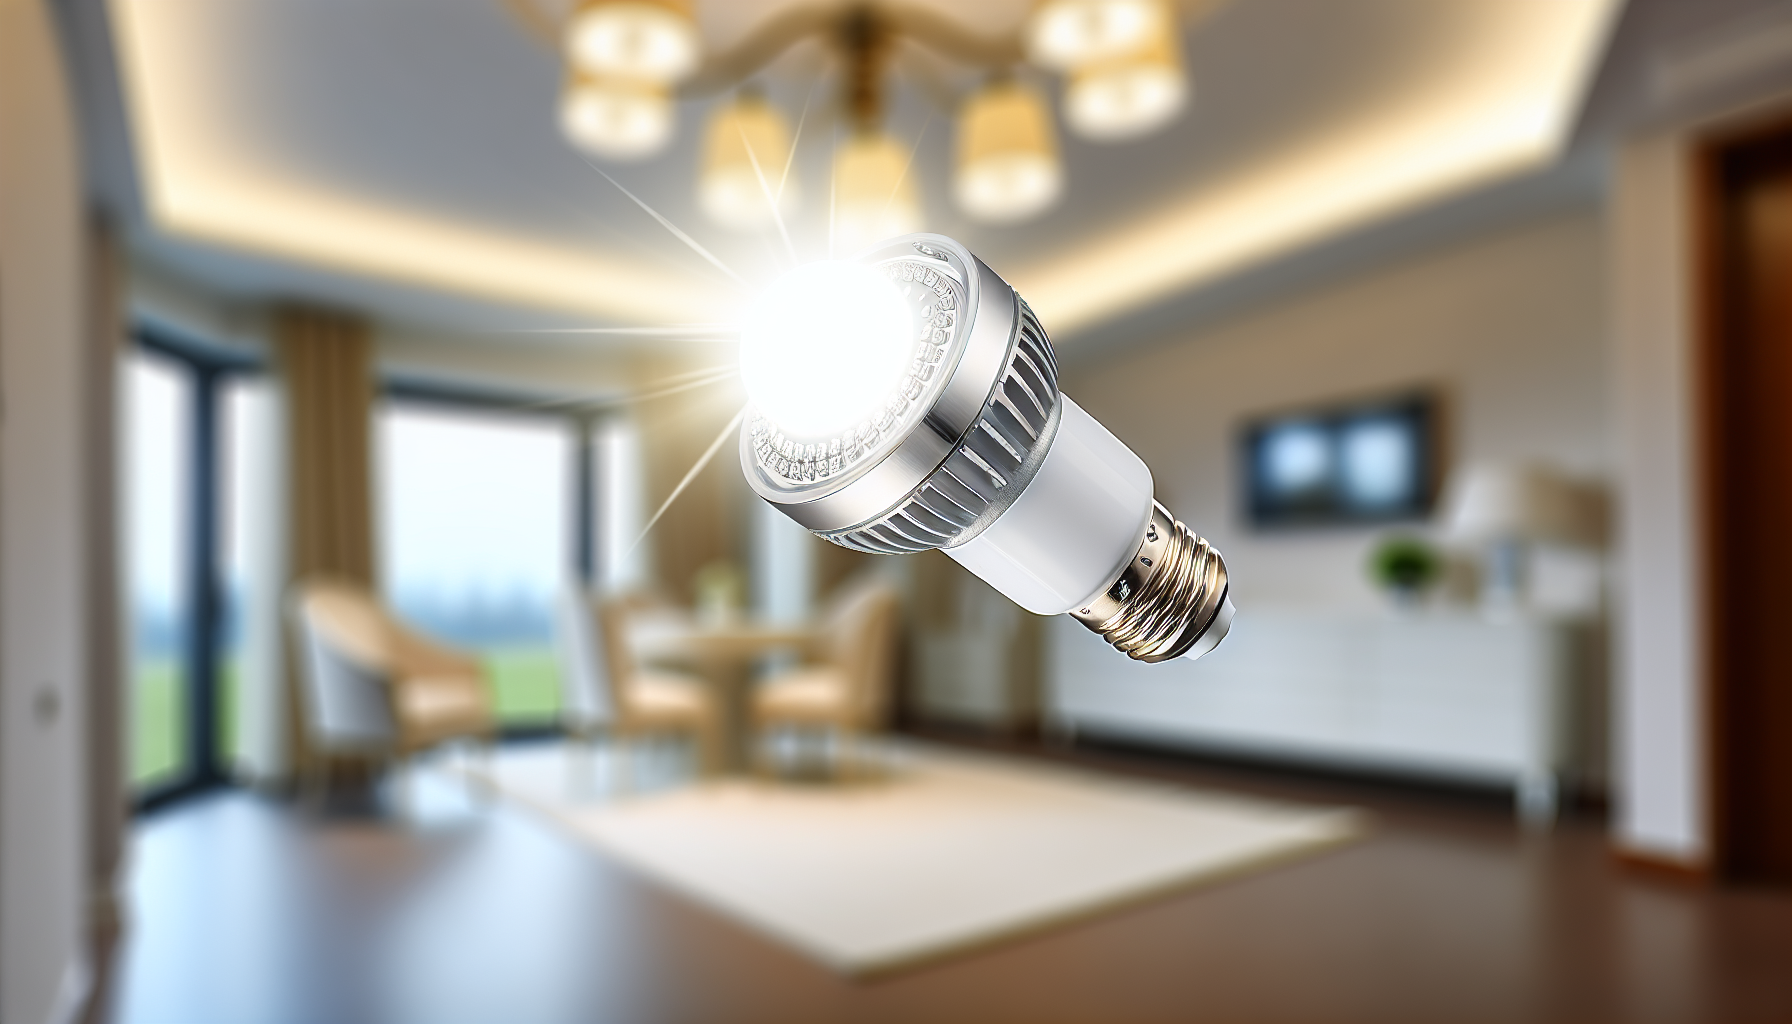 LED bulb emitting bright light